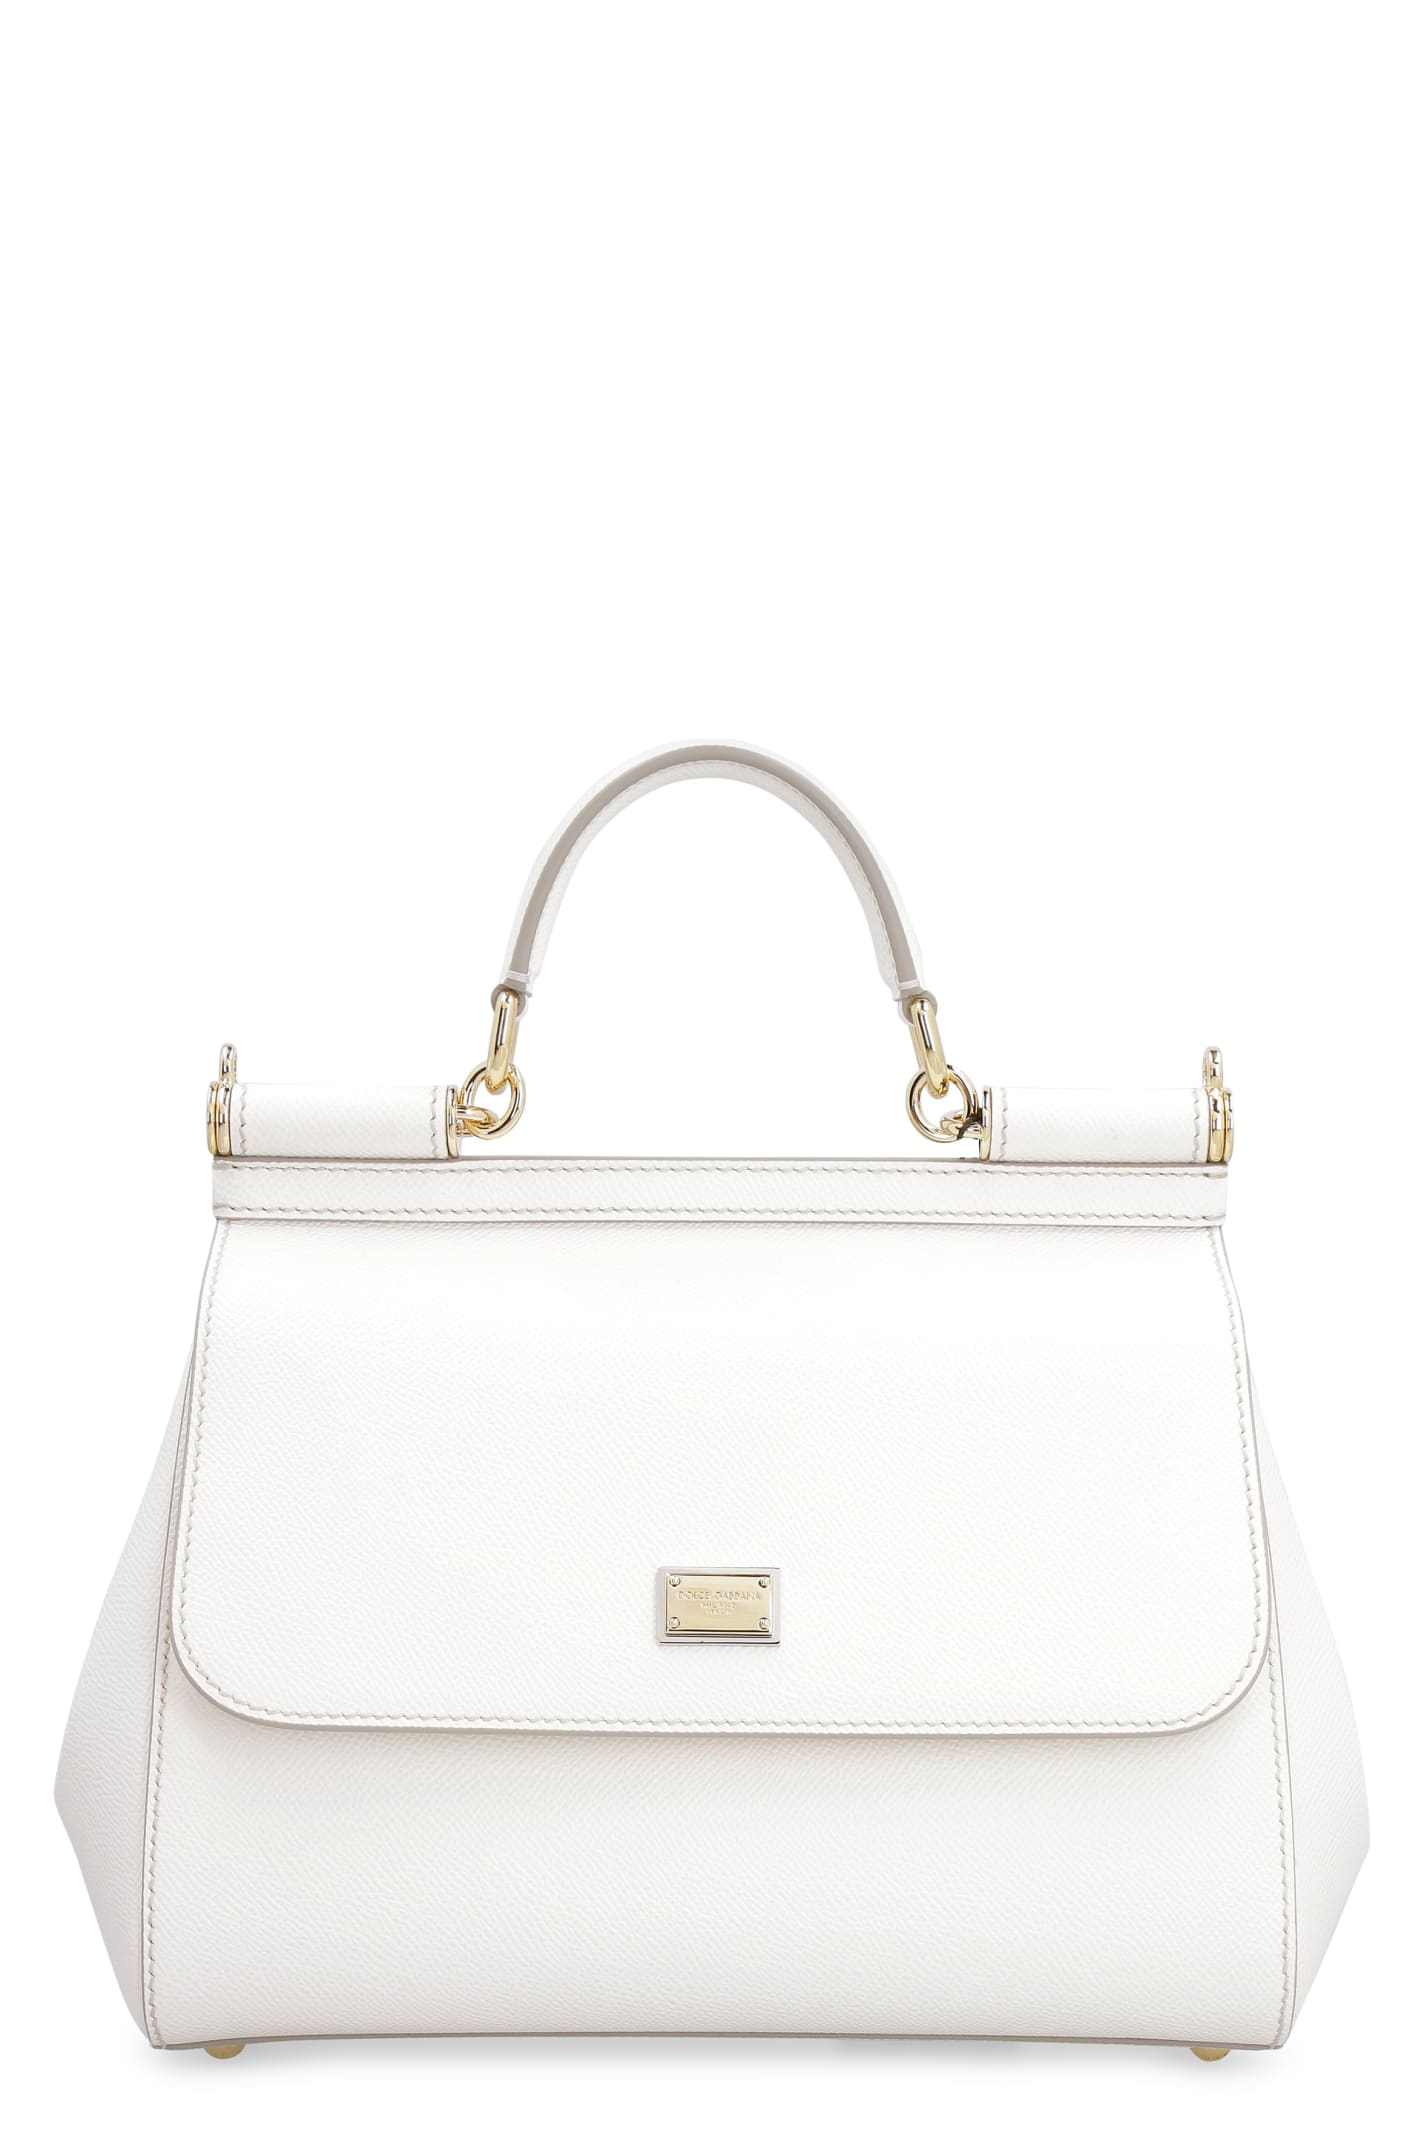 Dolce & Gabbana Sicily Handbag In White